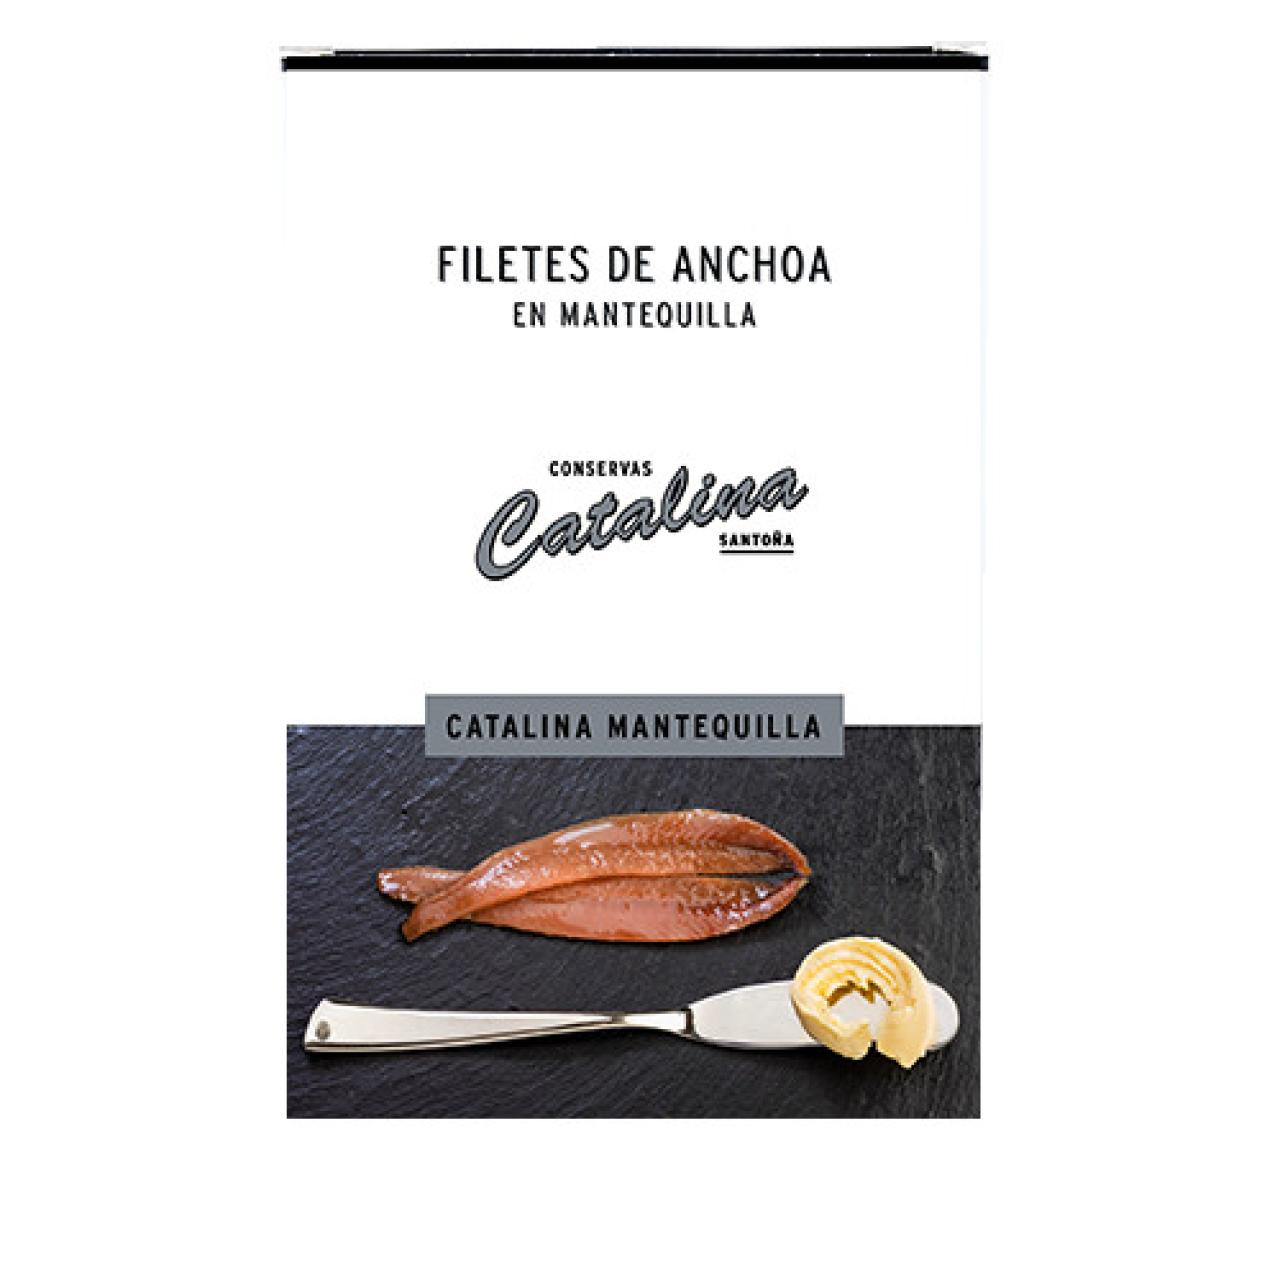 Filetes de anchoa en mantequilla de Conservas Catalina.